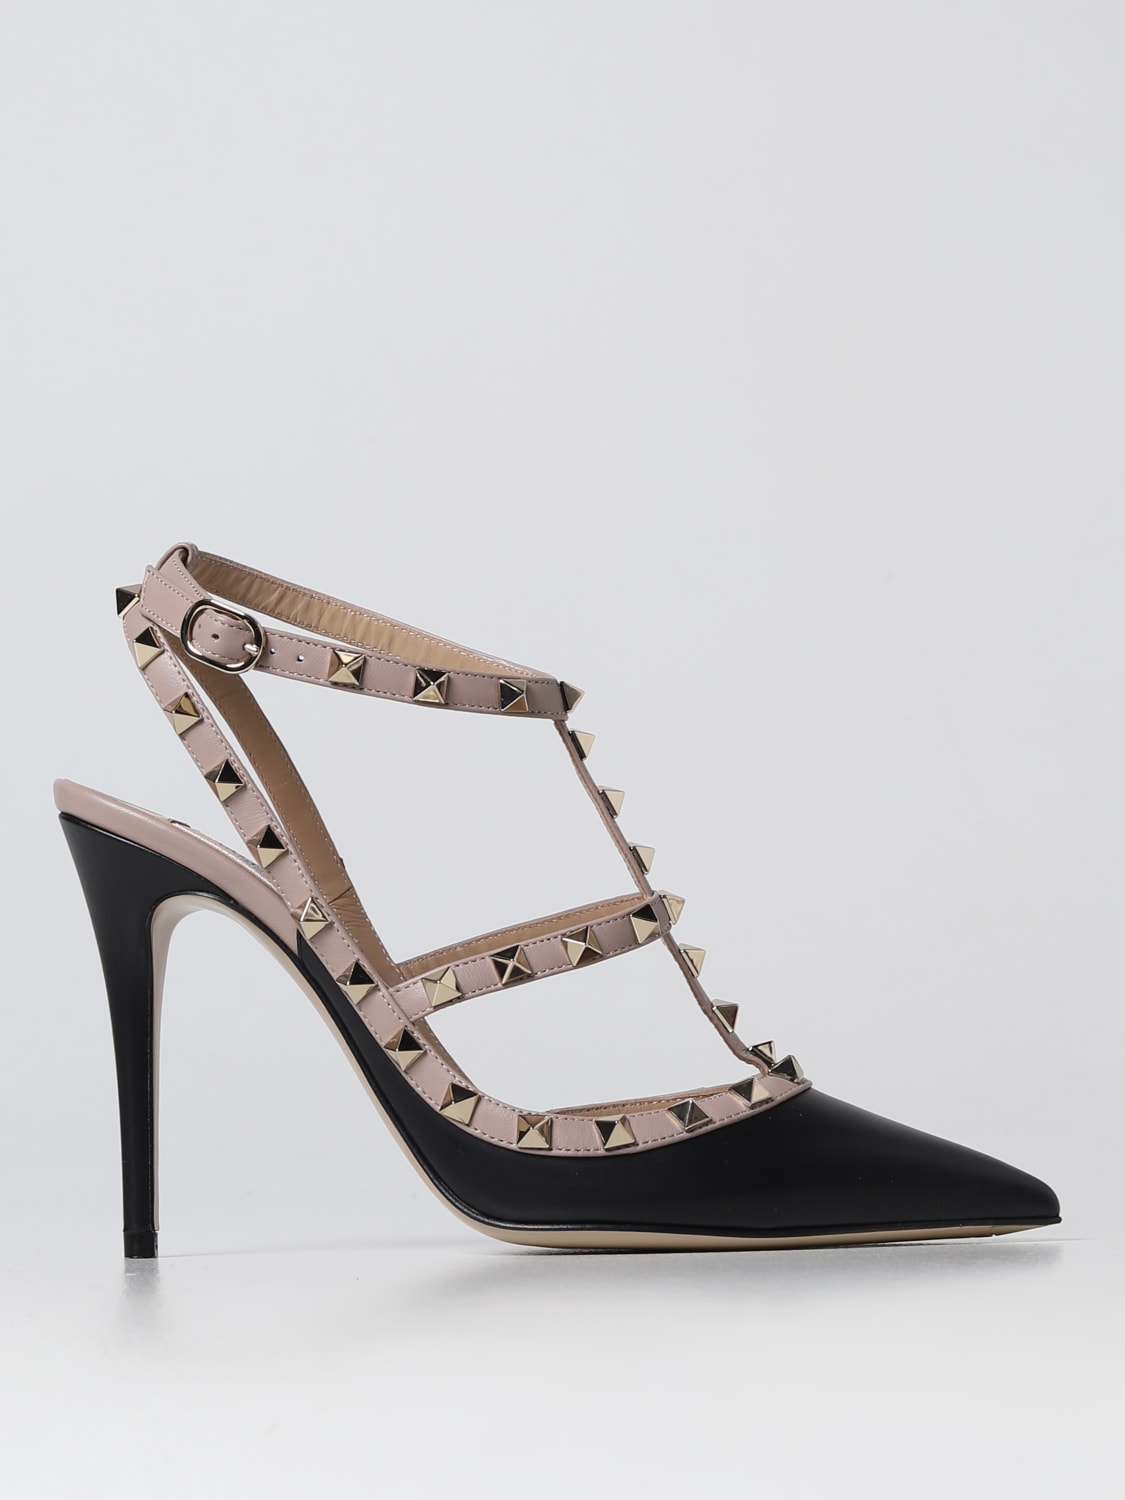 VALENTINO high heel shoes woman - Black | Valentino Garavani high heel shoes online on GIGLIO.COM